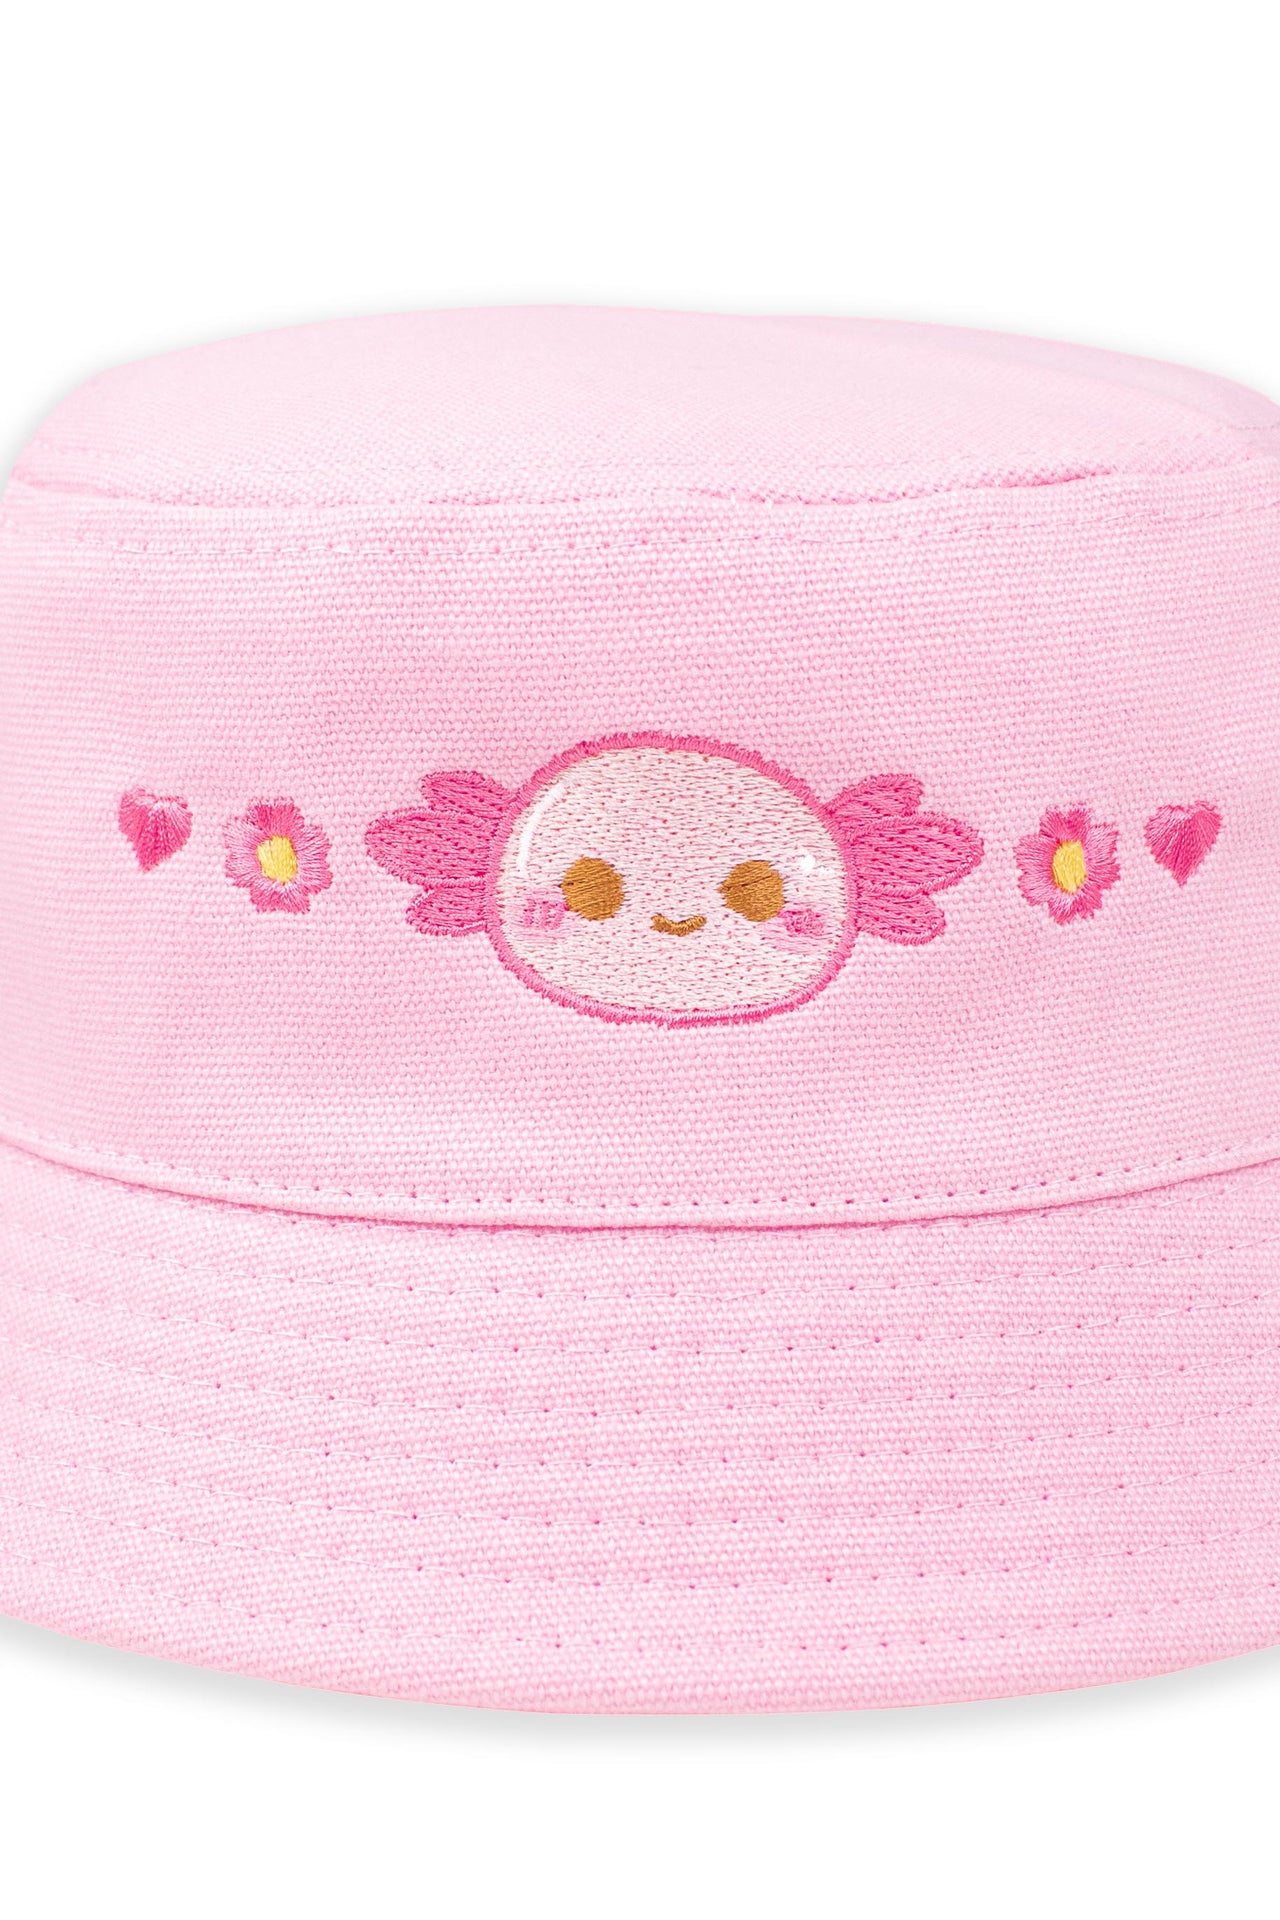 Xoxi The Axolotl Embroidered Bucket Hat - Momokakkoii